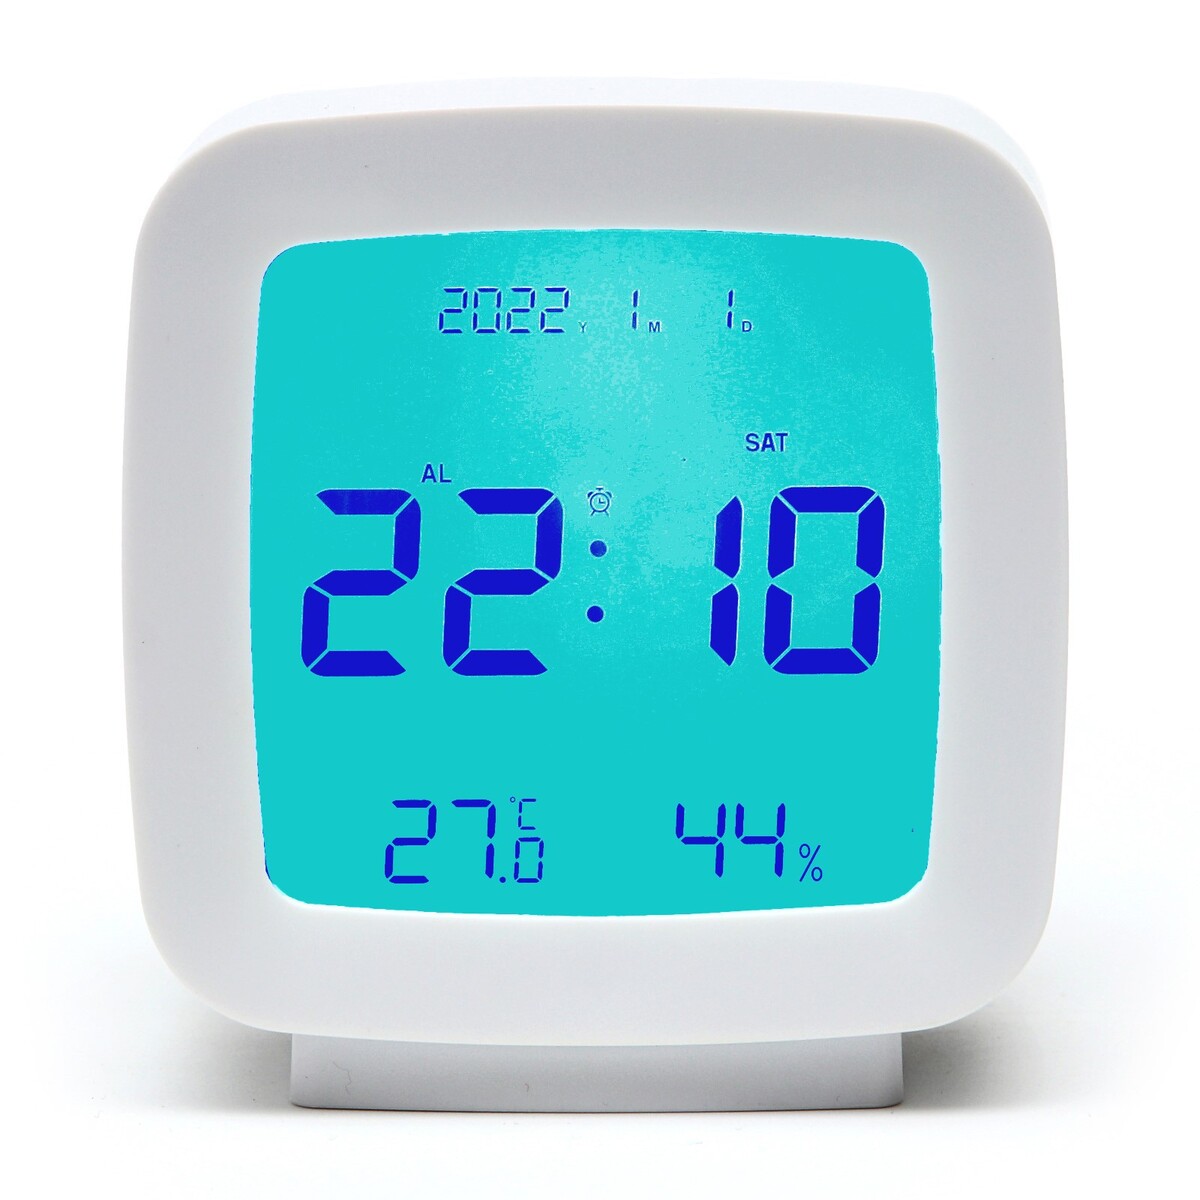 Часы - будильник электронные настольные: термометр, календарь, гигрометр, 7.8 х 8.3 см часы настольные электронные будильник термометр календарь гигрометр 7 8х8 3 см черные